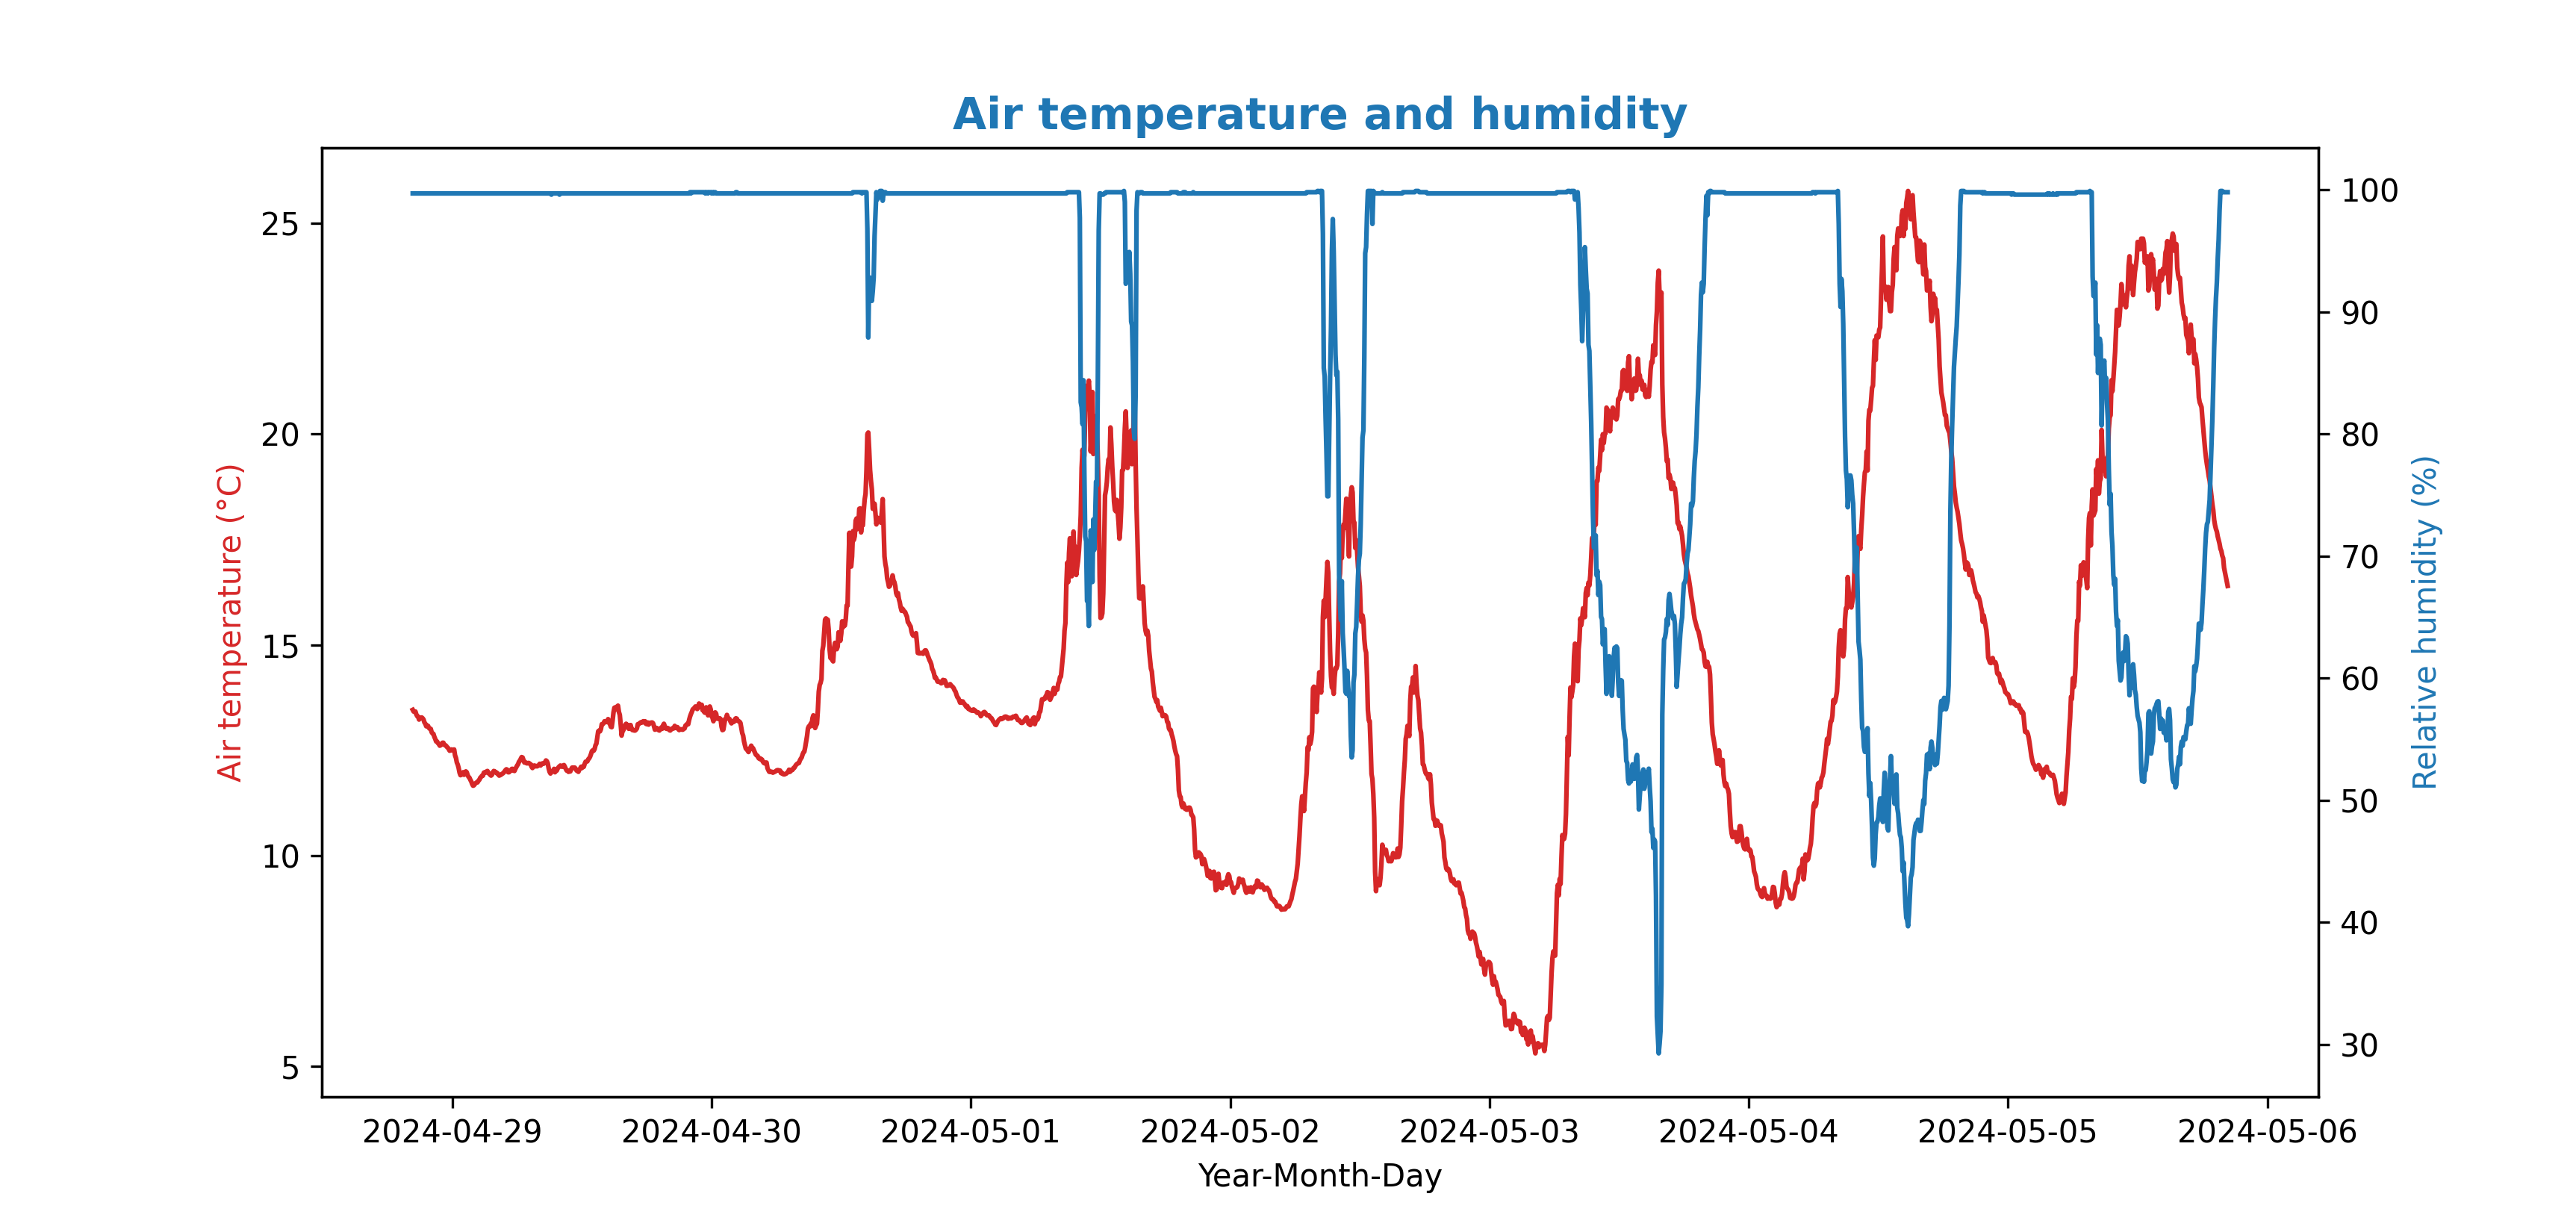 Air temperature and humidity